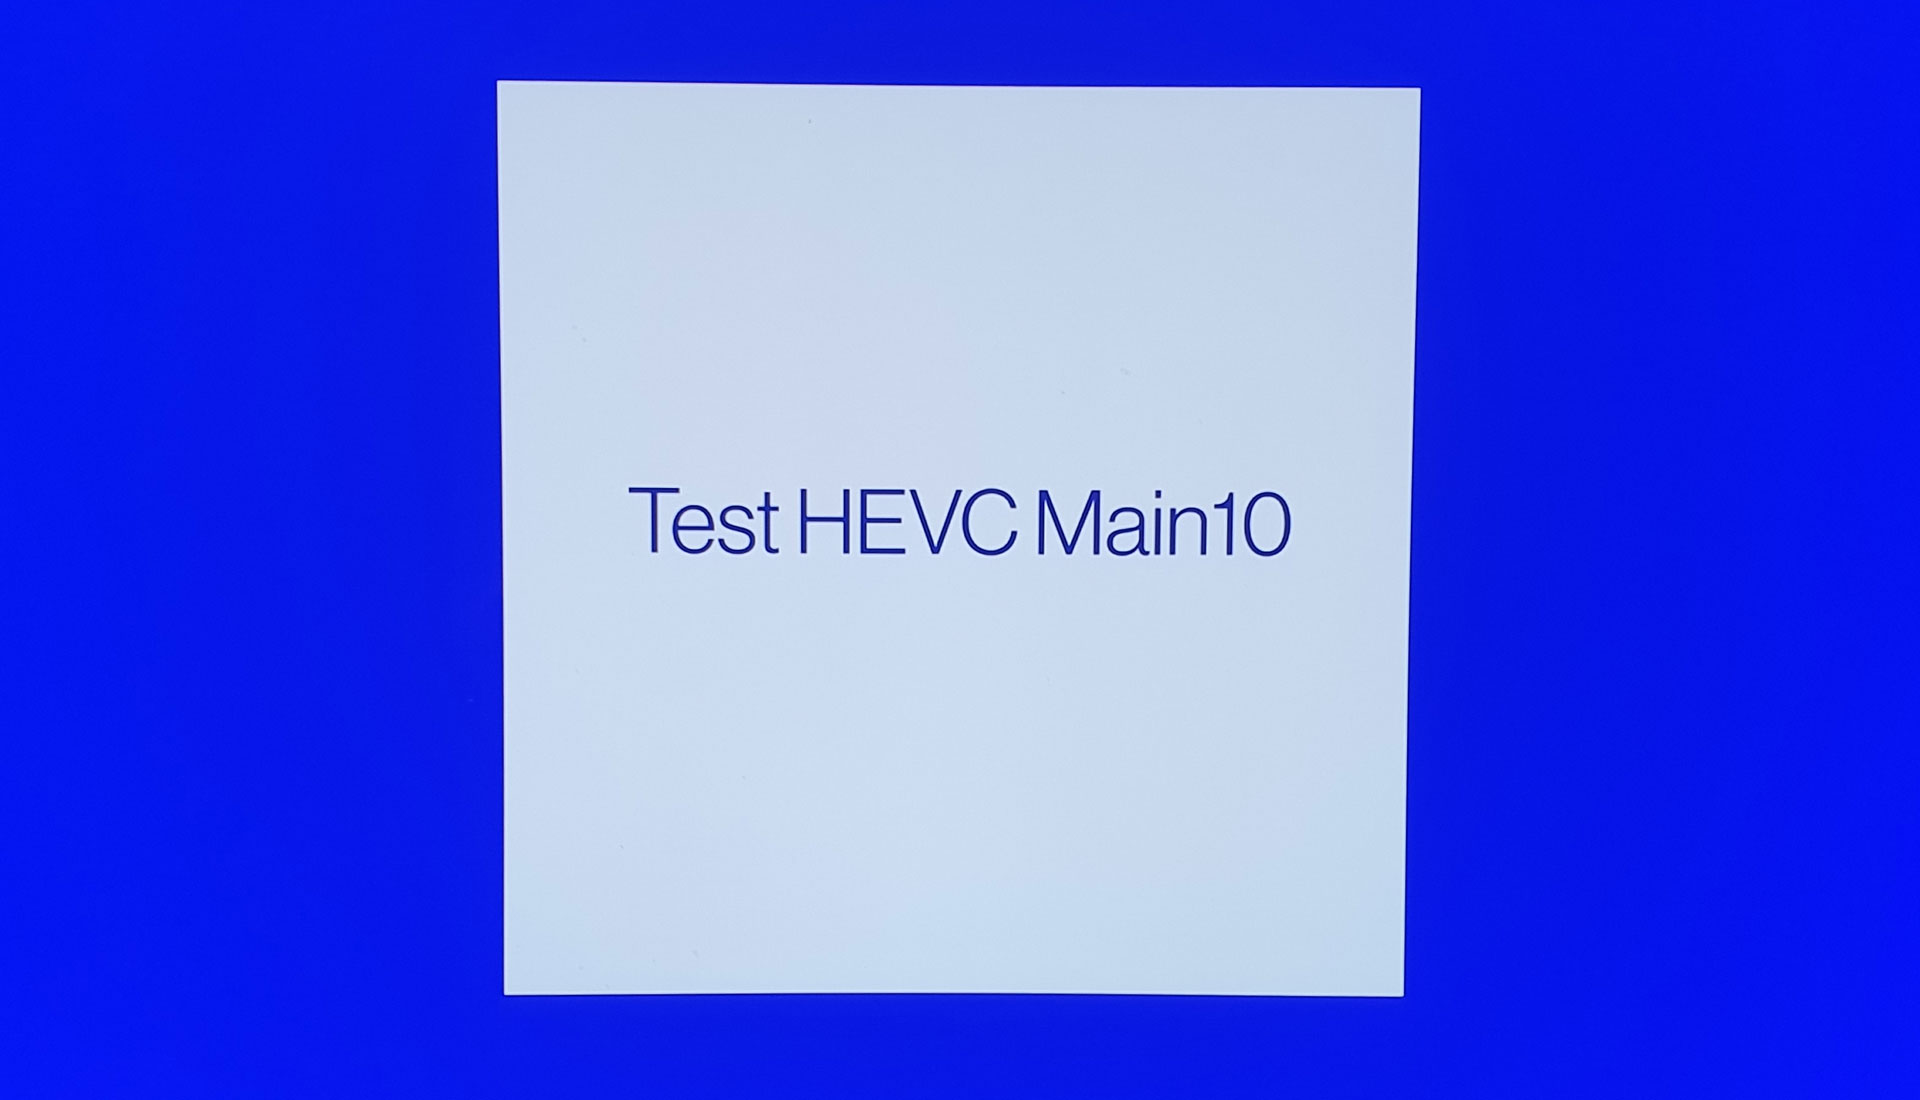 Esempio cartello 'Test HEVC Main10'